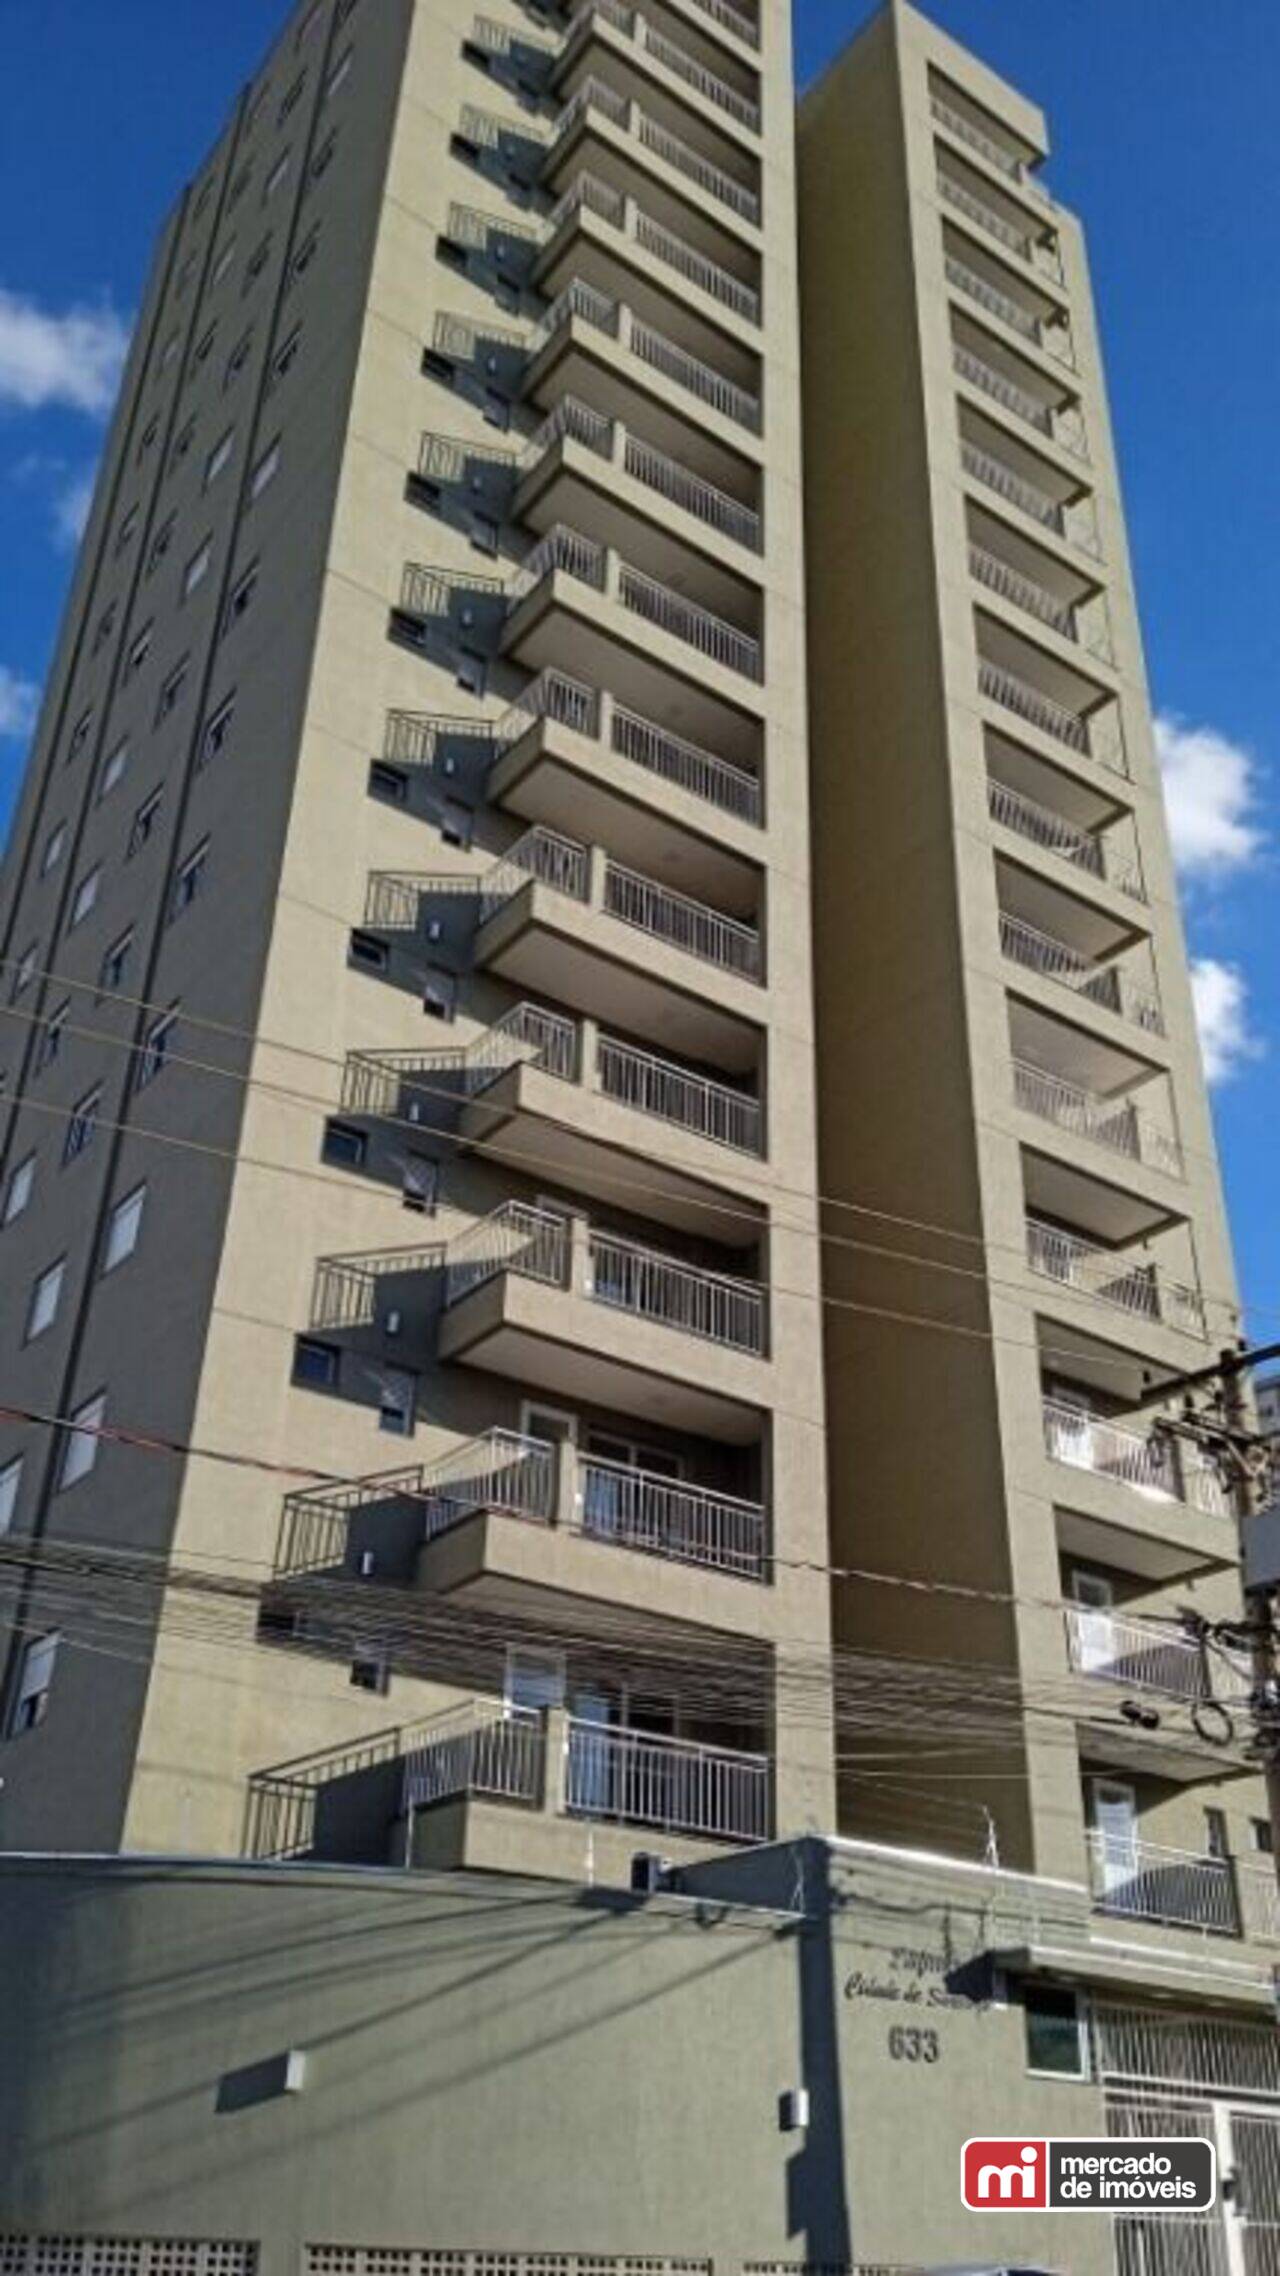  Jardim Irajá, Ribeirão Preto - SP